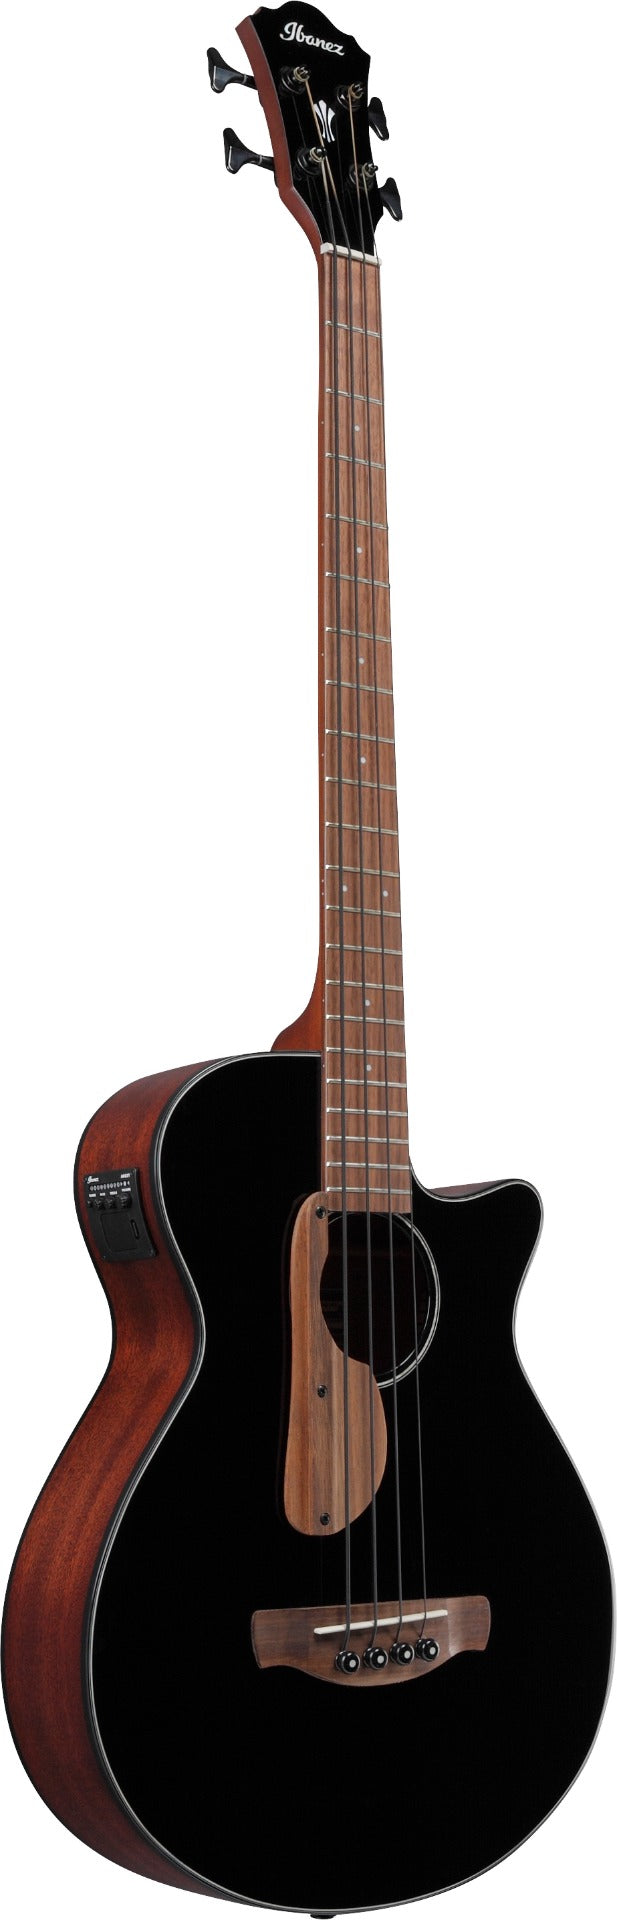 Ibanez AEGB24EBKH Acoustic Electric Bass Guitar - Black High Gloss